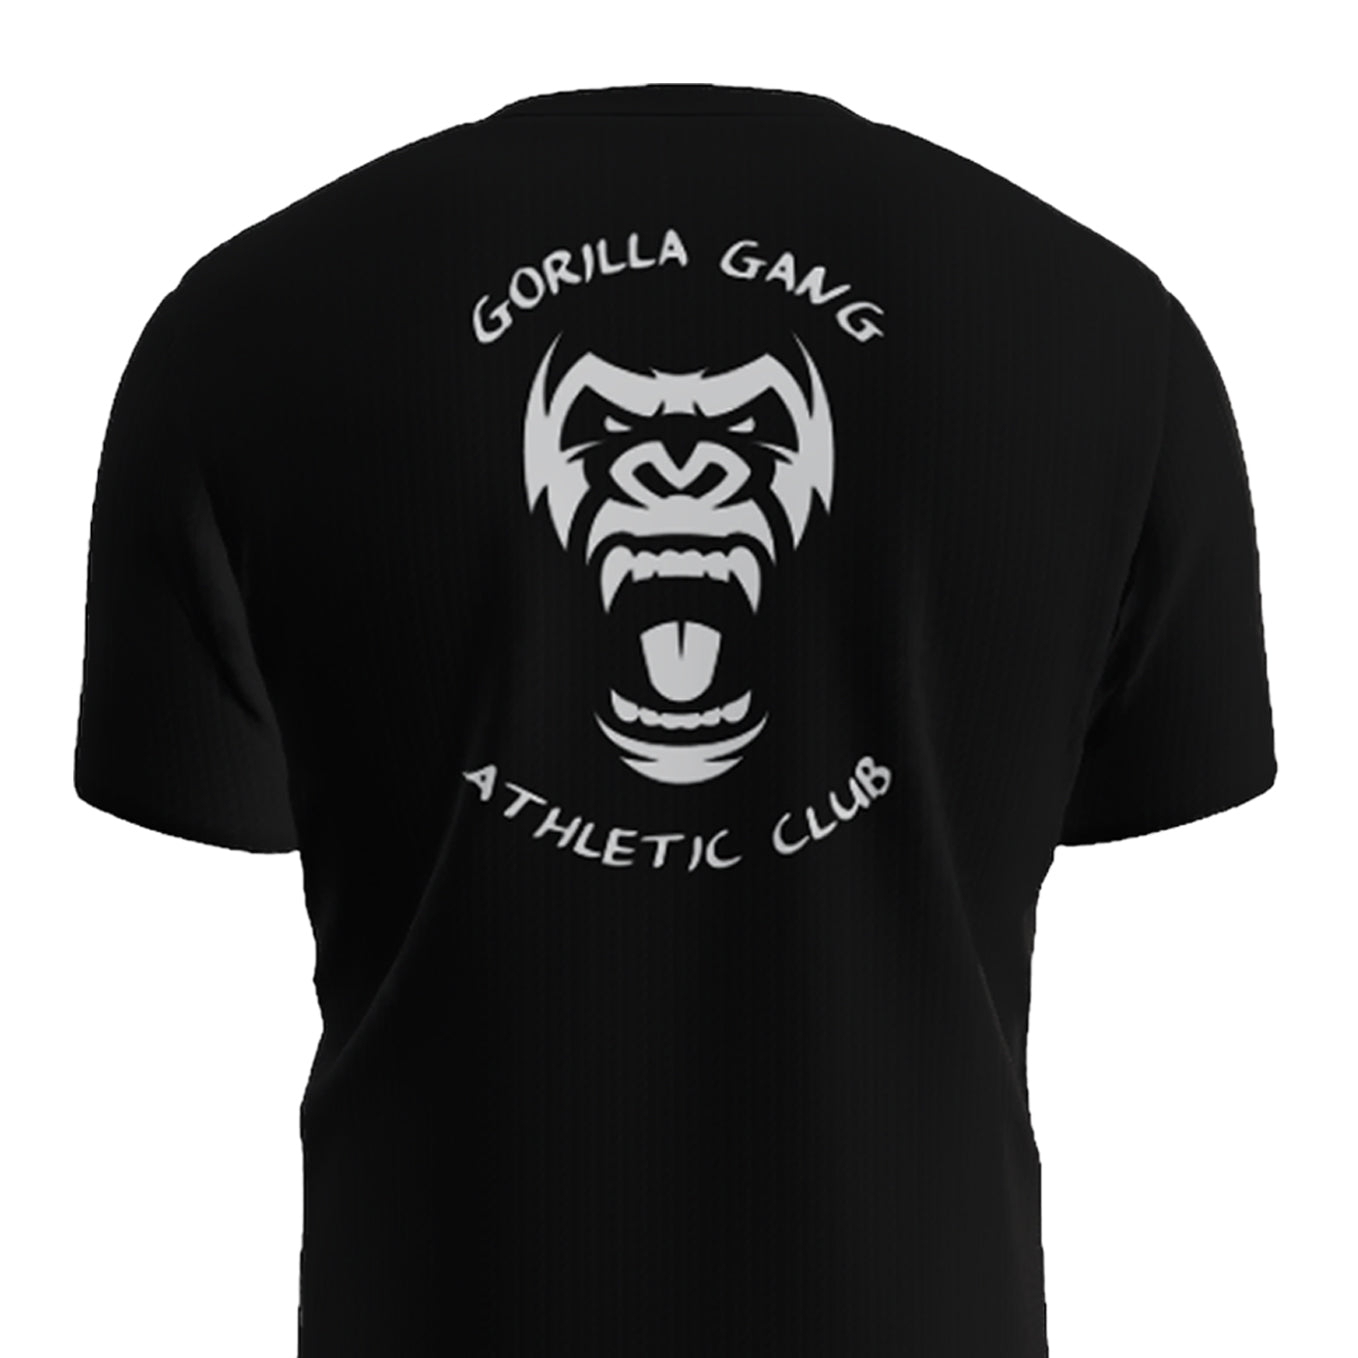 Gorilla Gang Athletic Club T-Shirt